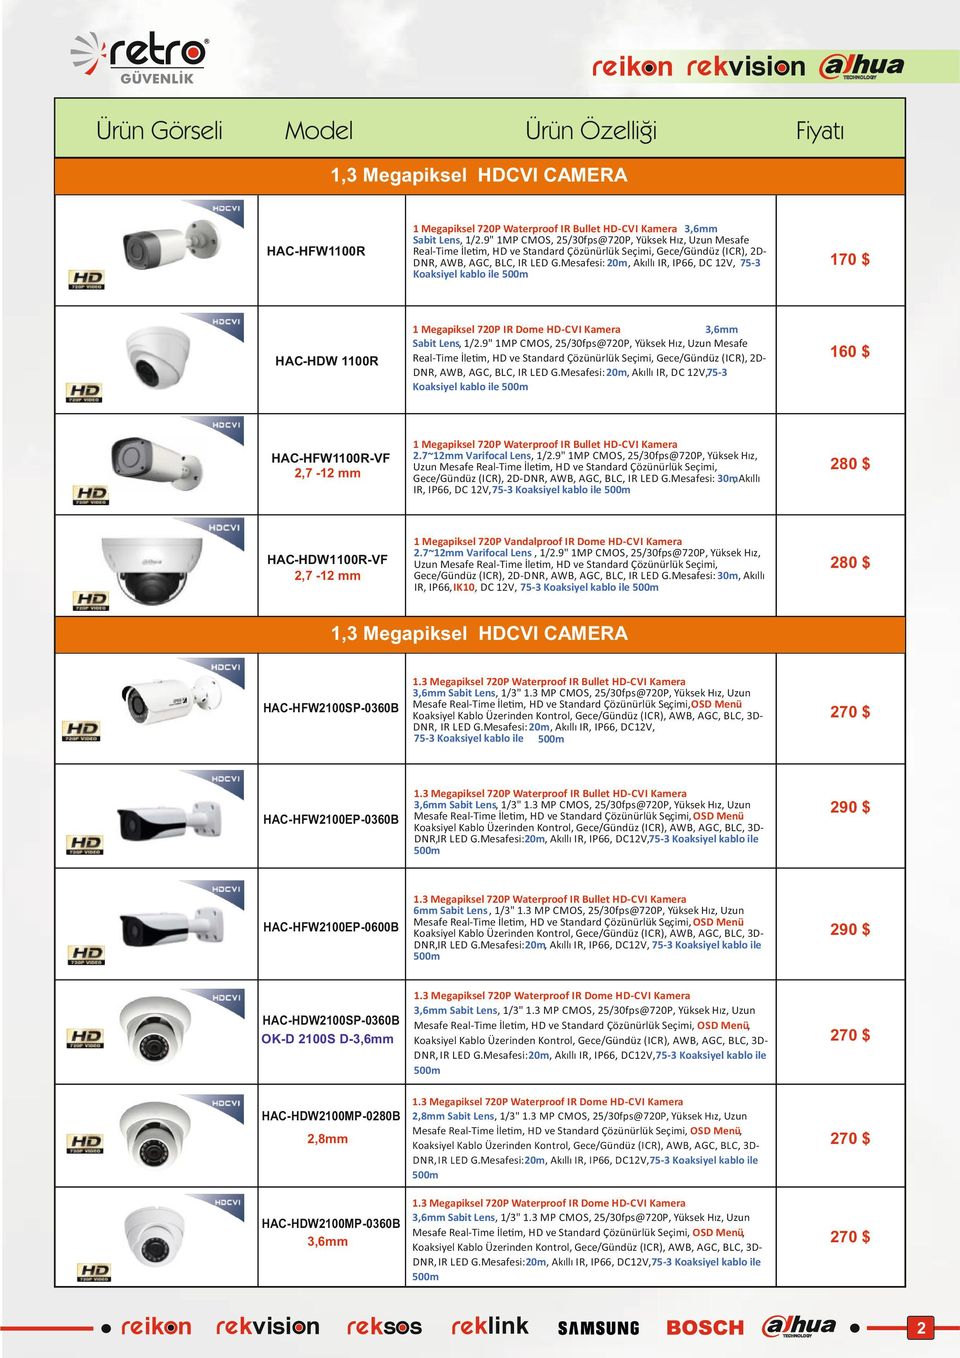 Mesafesi: 20m, Akıllı IR, IP66, DC 12V, 75-3 Koaksiyel kablo ile 170 $ 1 Megapiksel 720P IR Dome HD-CVI Kamera Sabit Lens, 1/2.